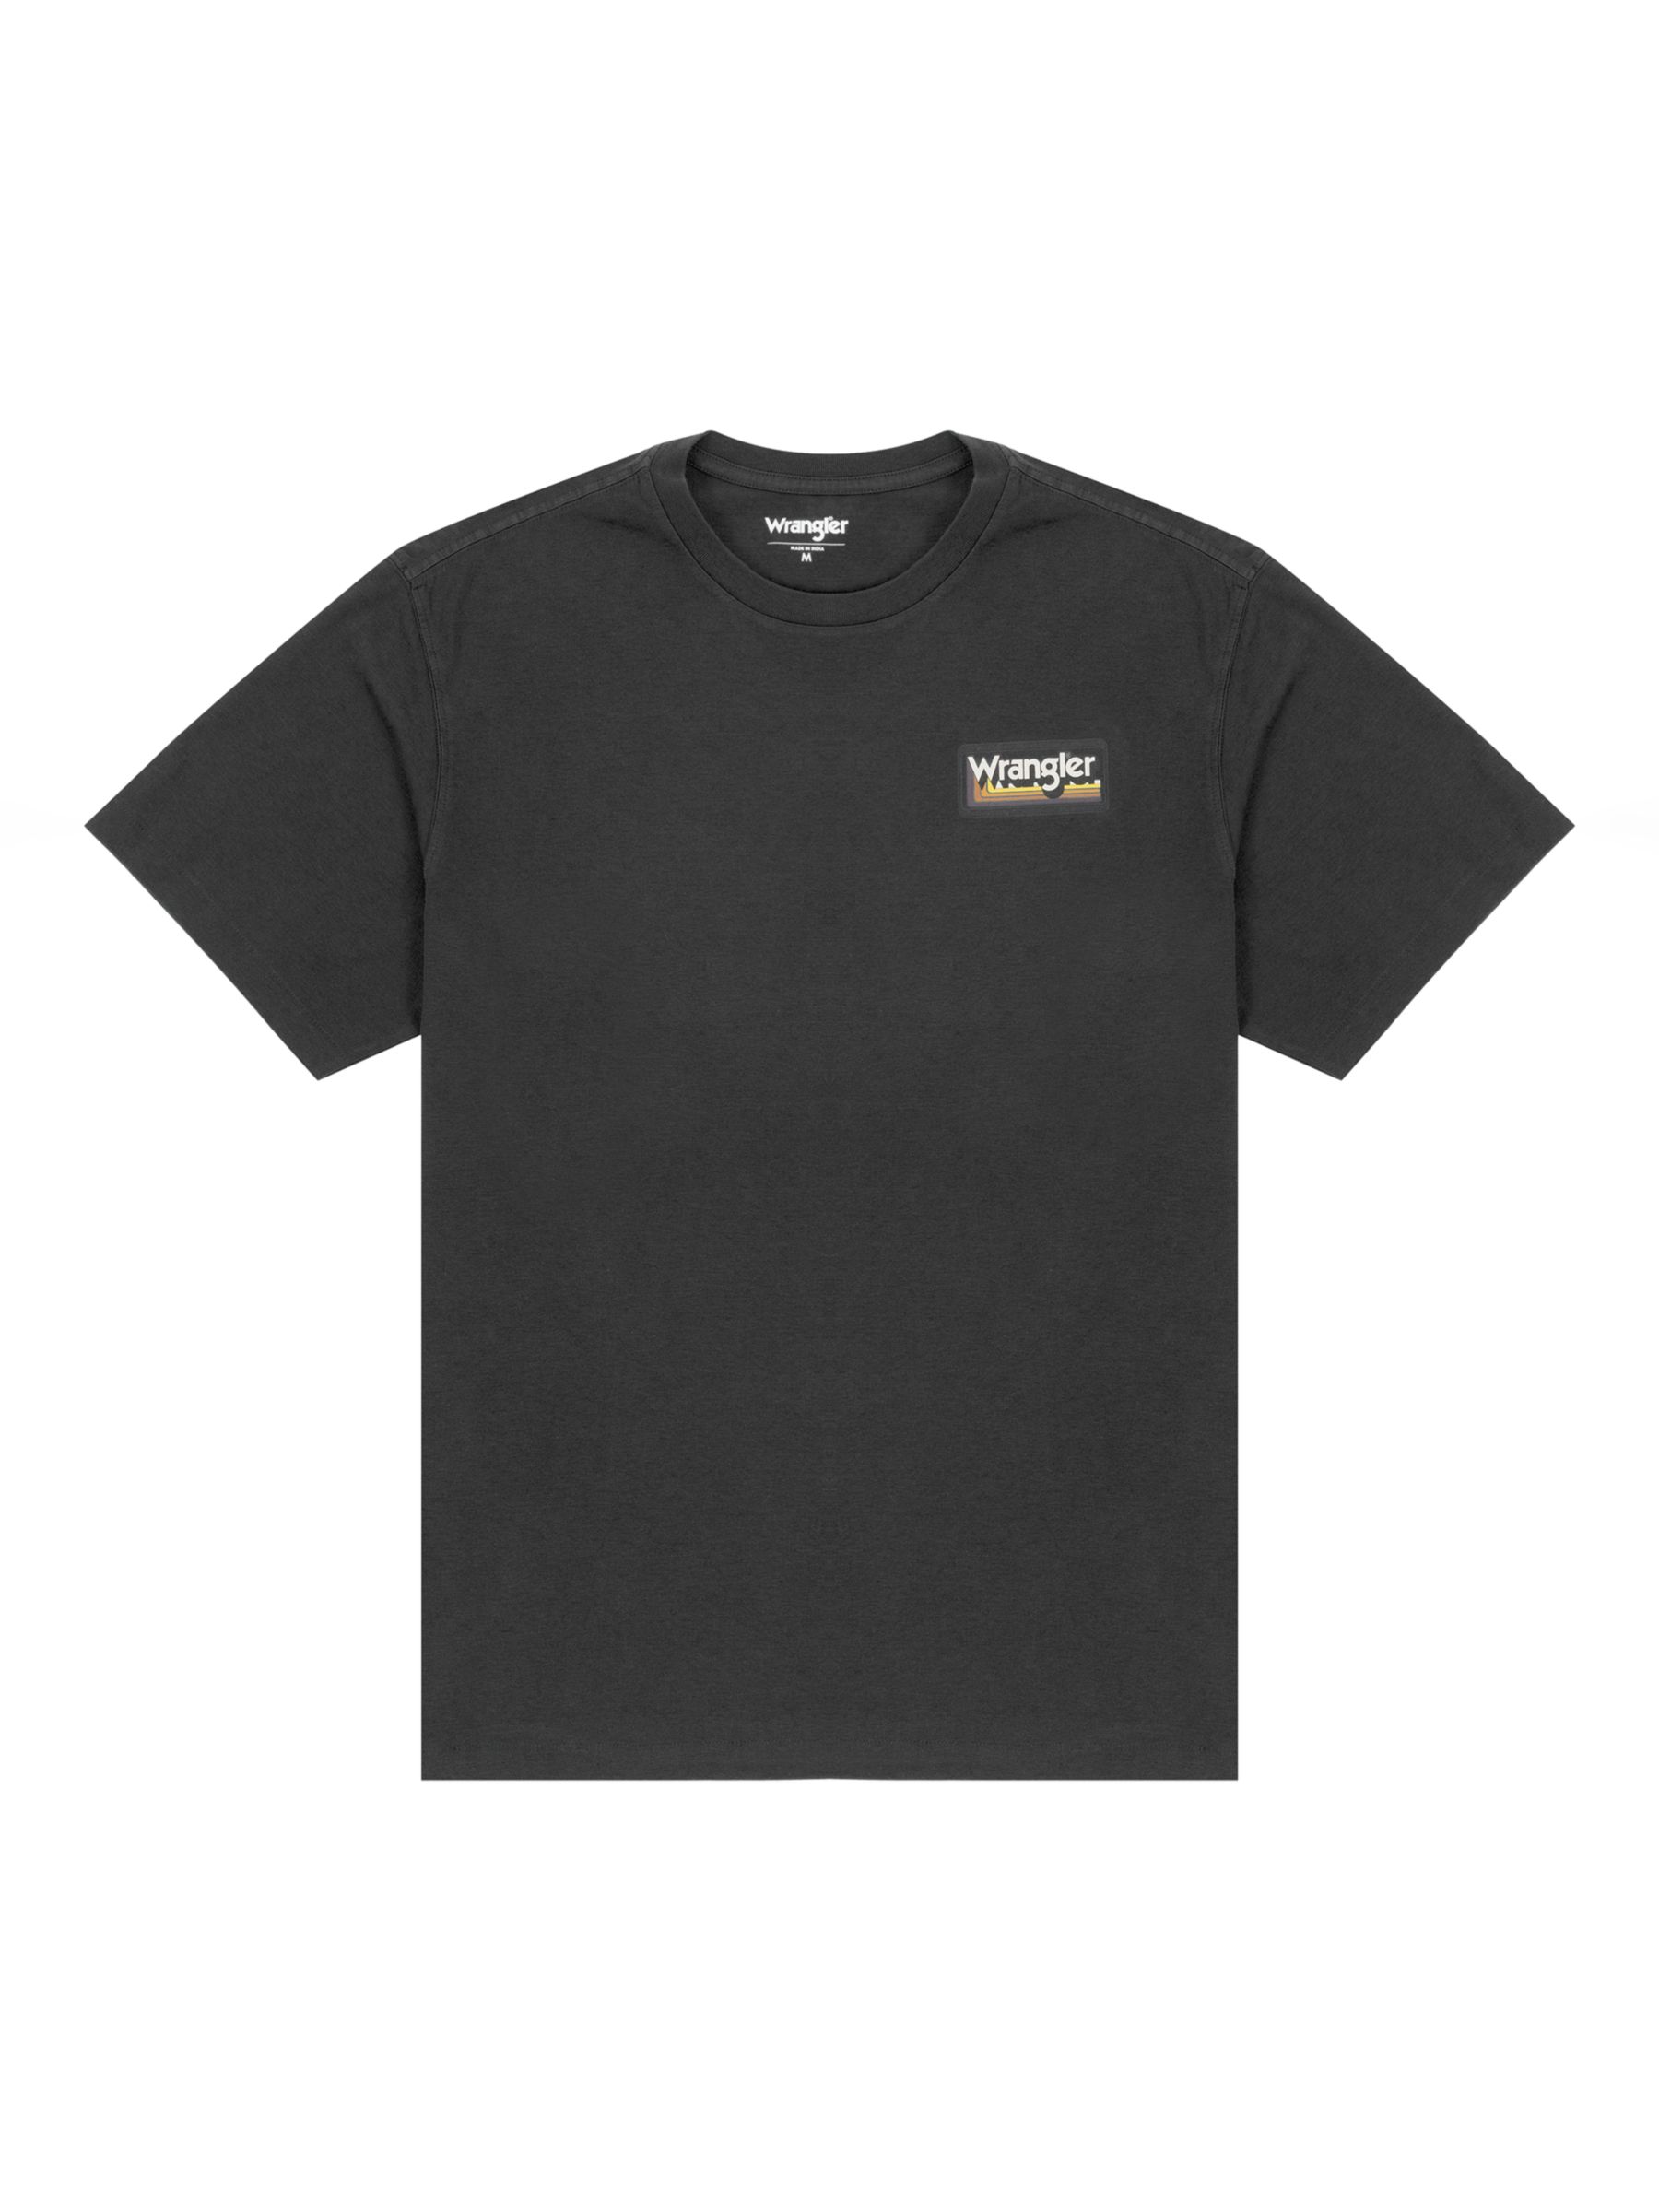 Wrangler Graphic T-Shirt, Black, L